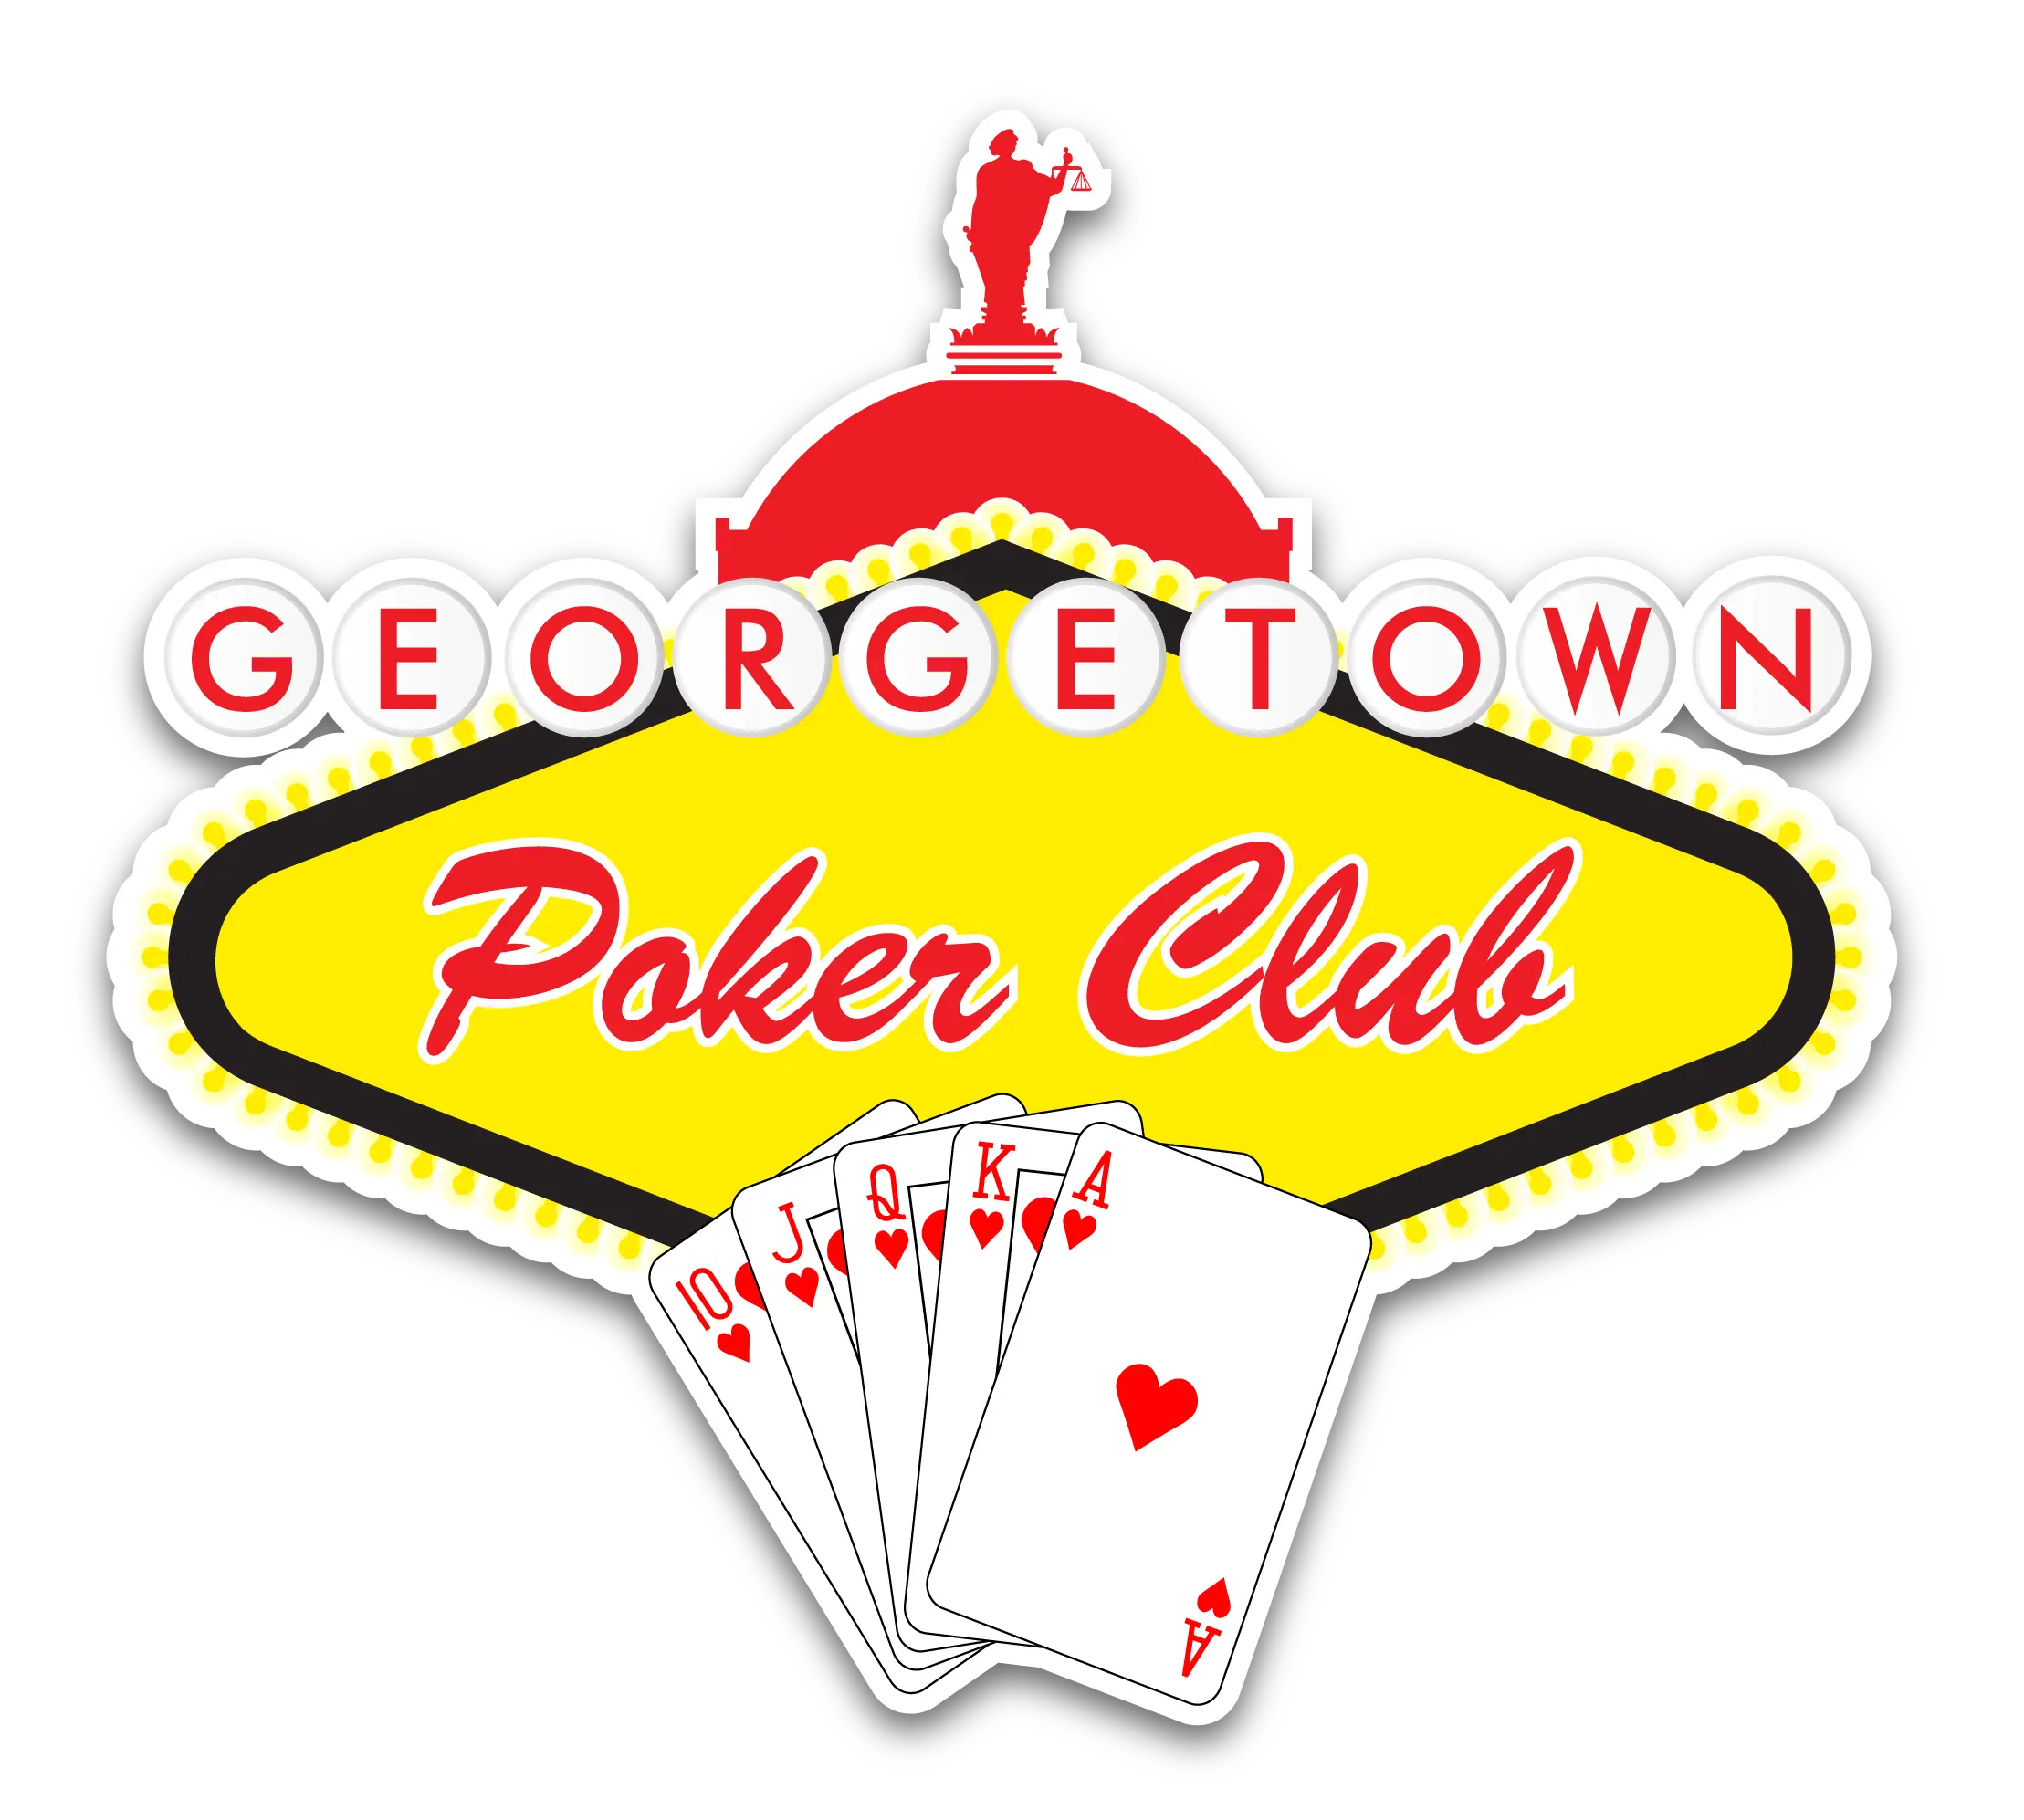 Georgetown Poker Club - Play Poker near Austin, Texas